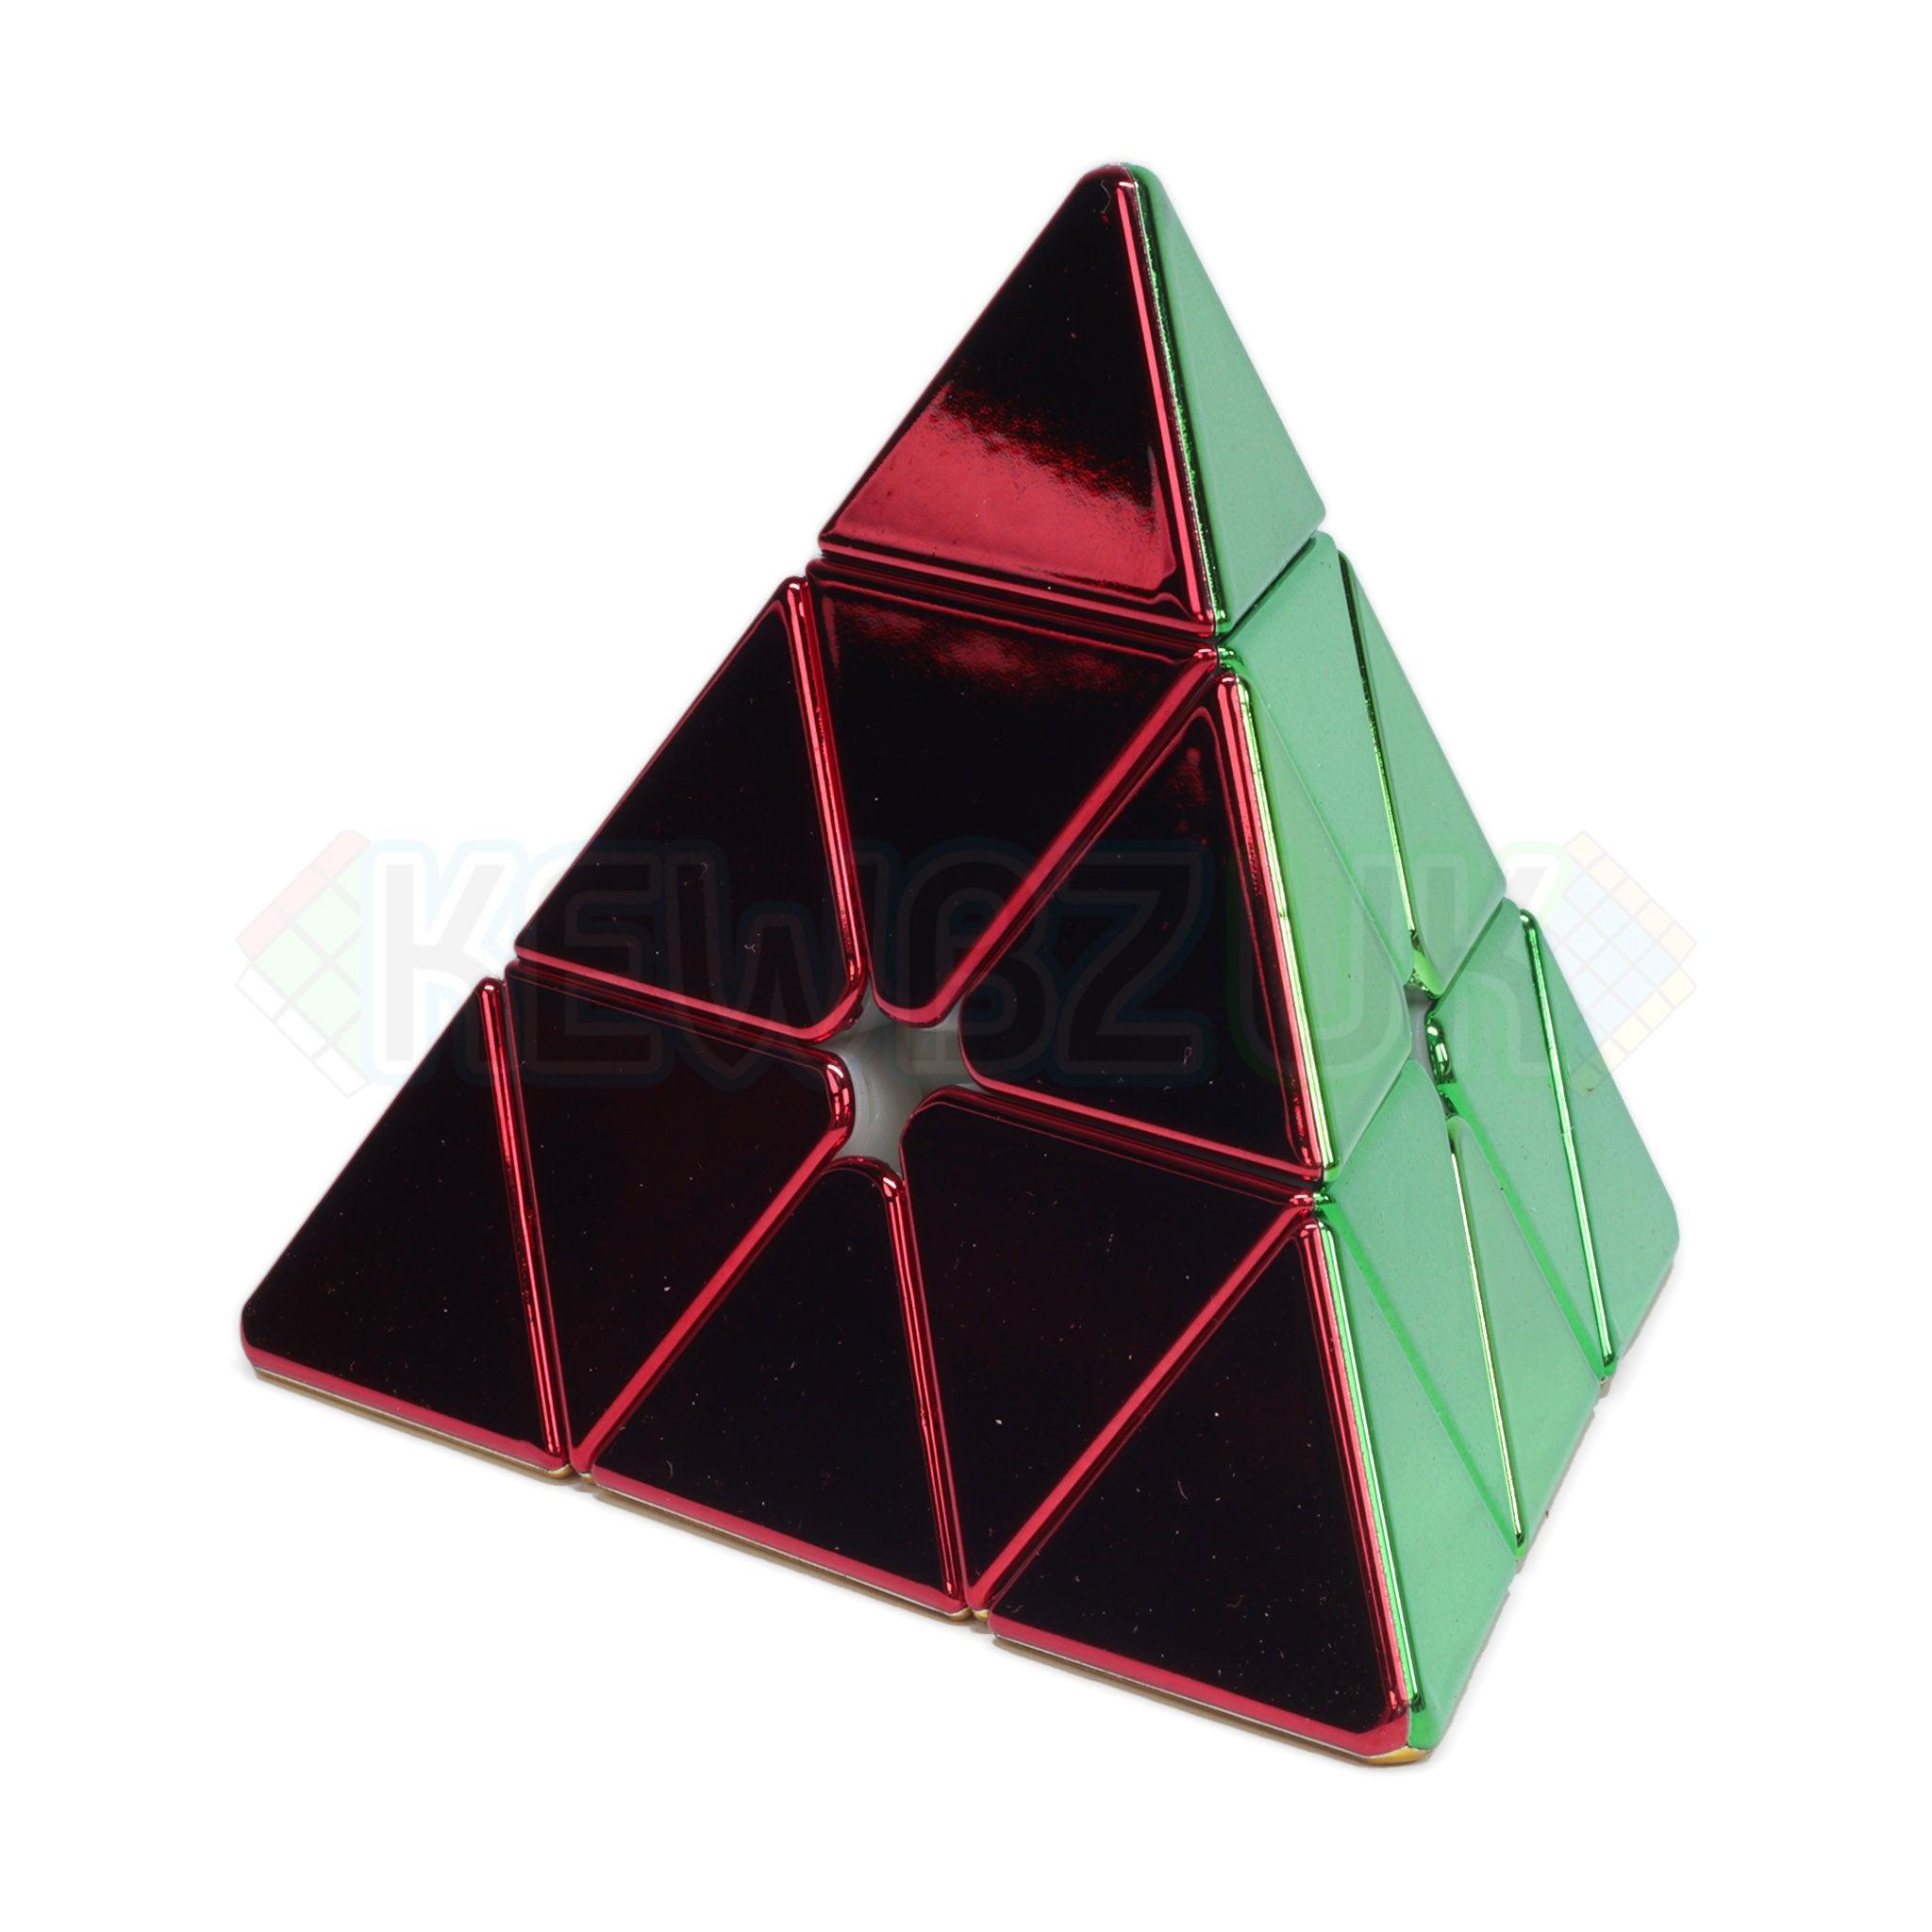 Z-Cube Metalic Pyraminx M (Smooth)